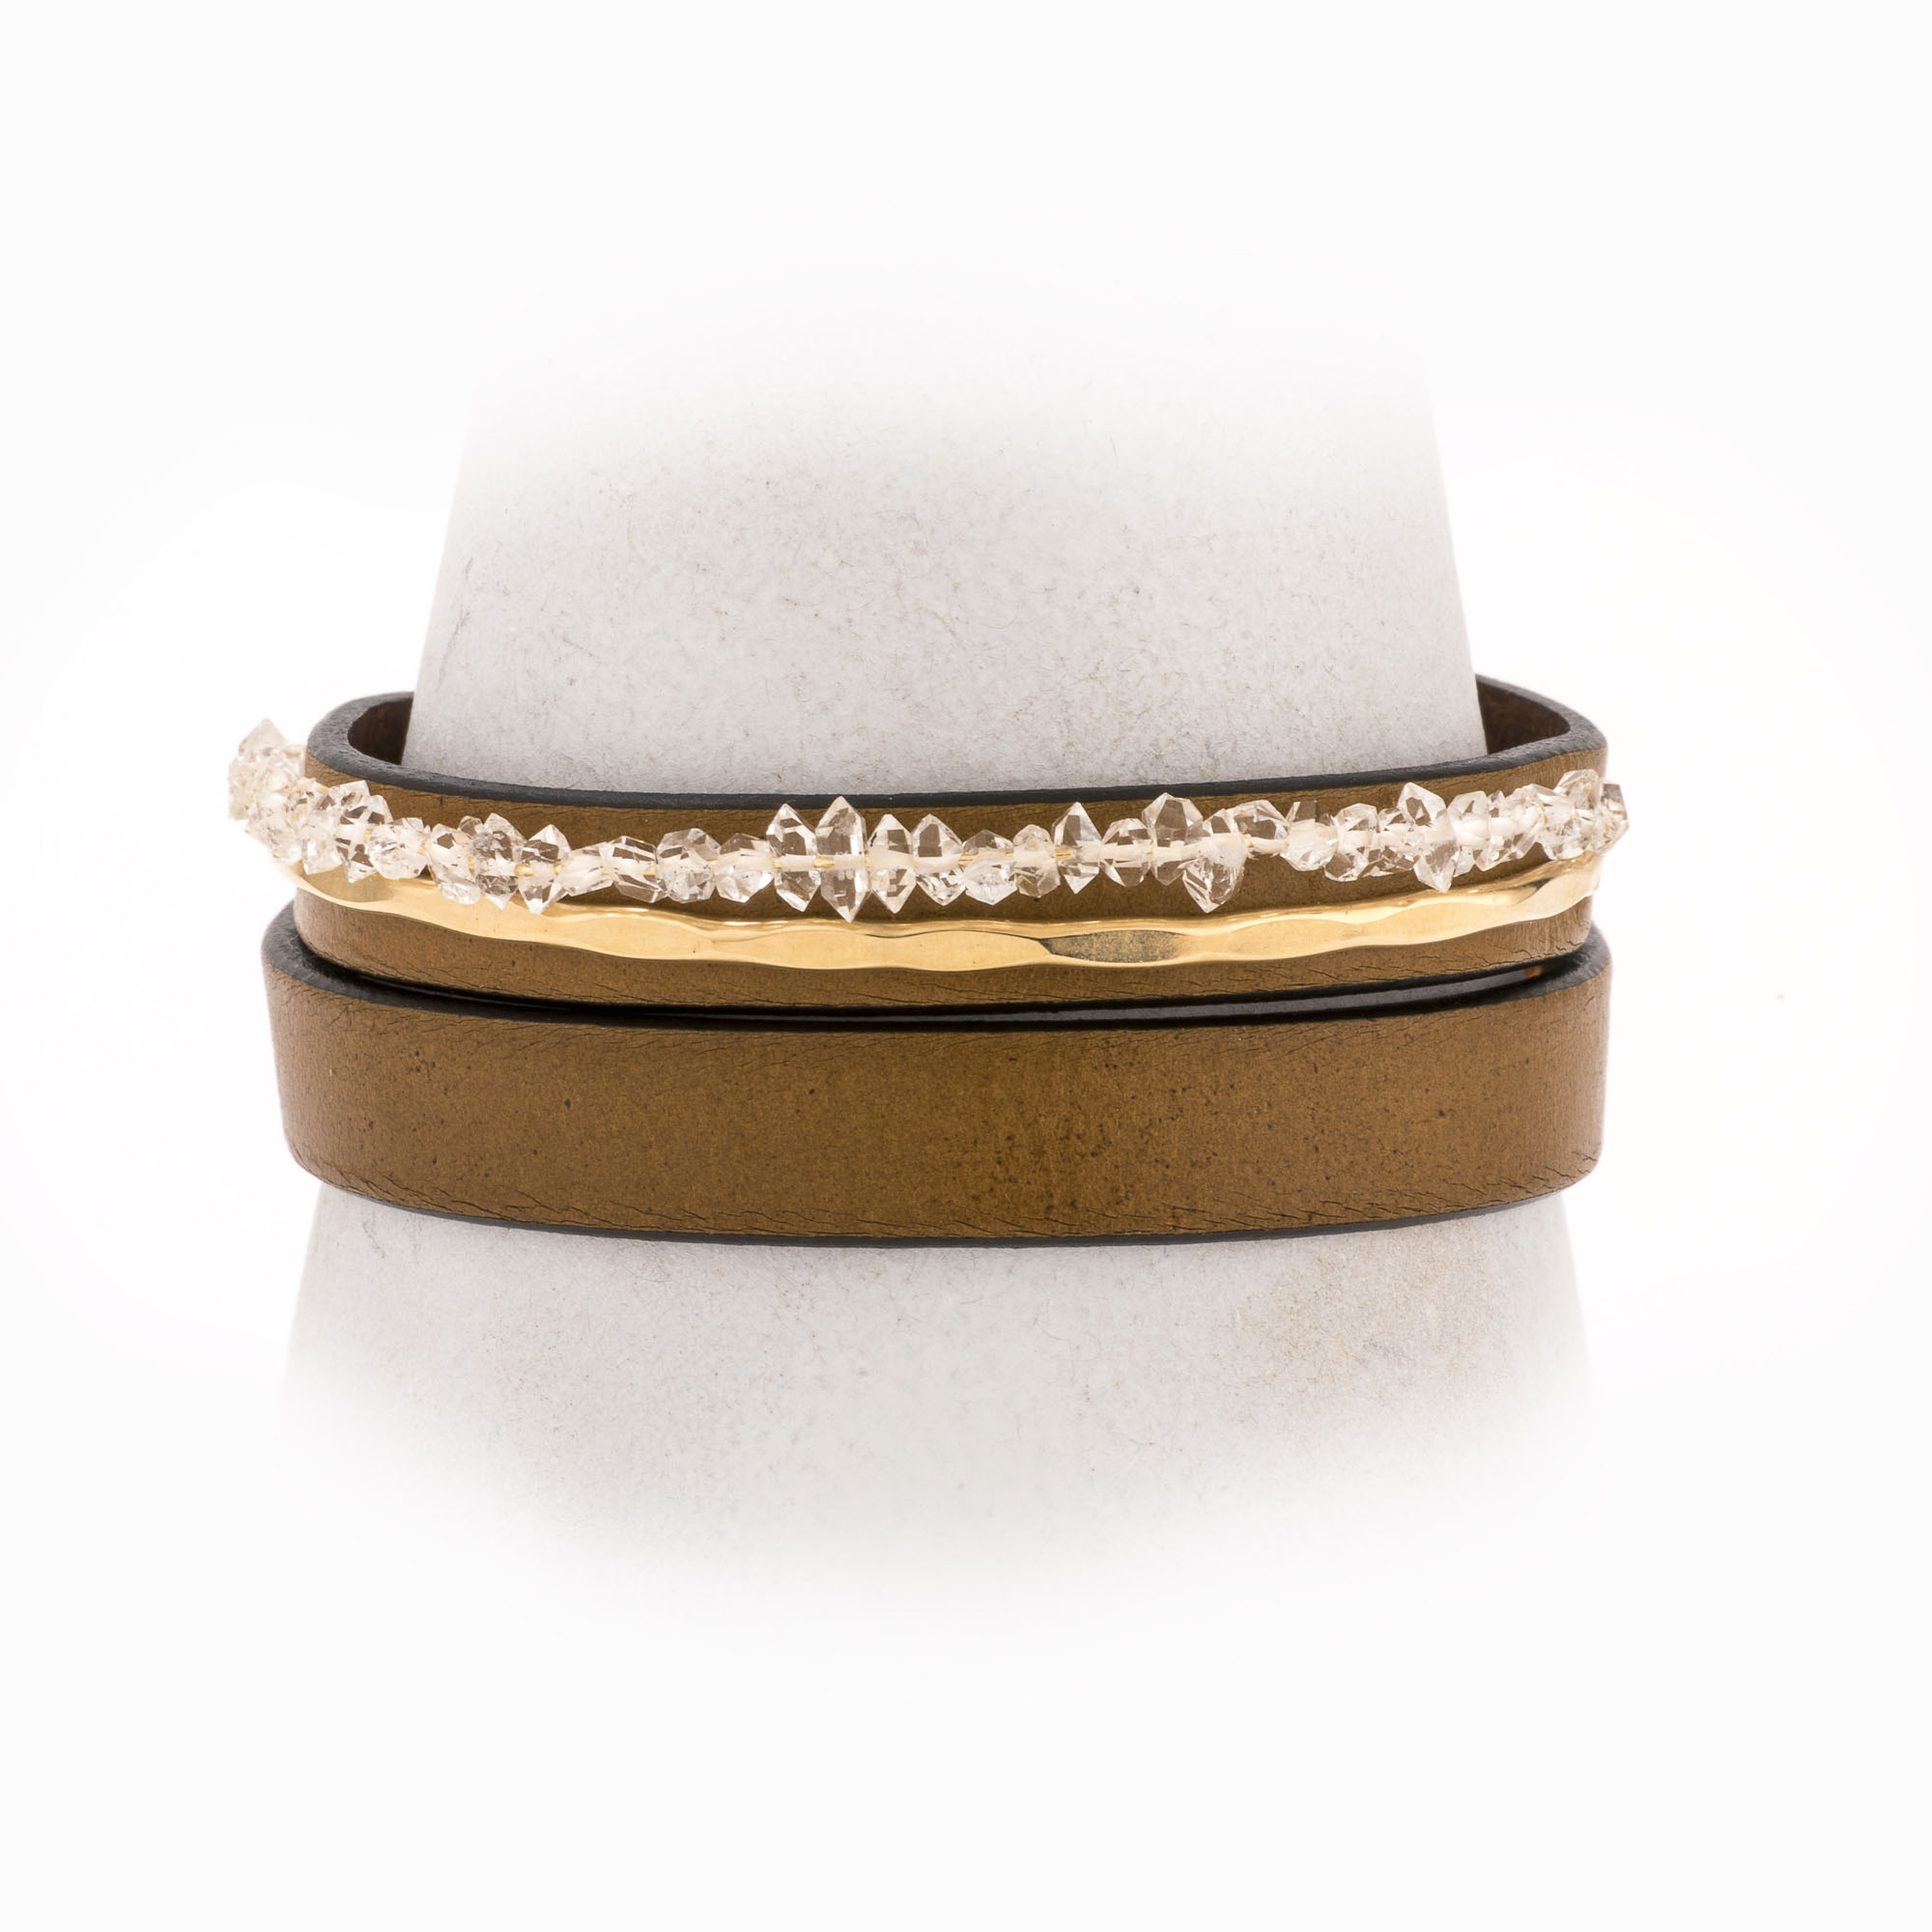 Featured image for “Auden Leather Wrap Bracelet”